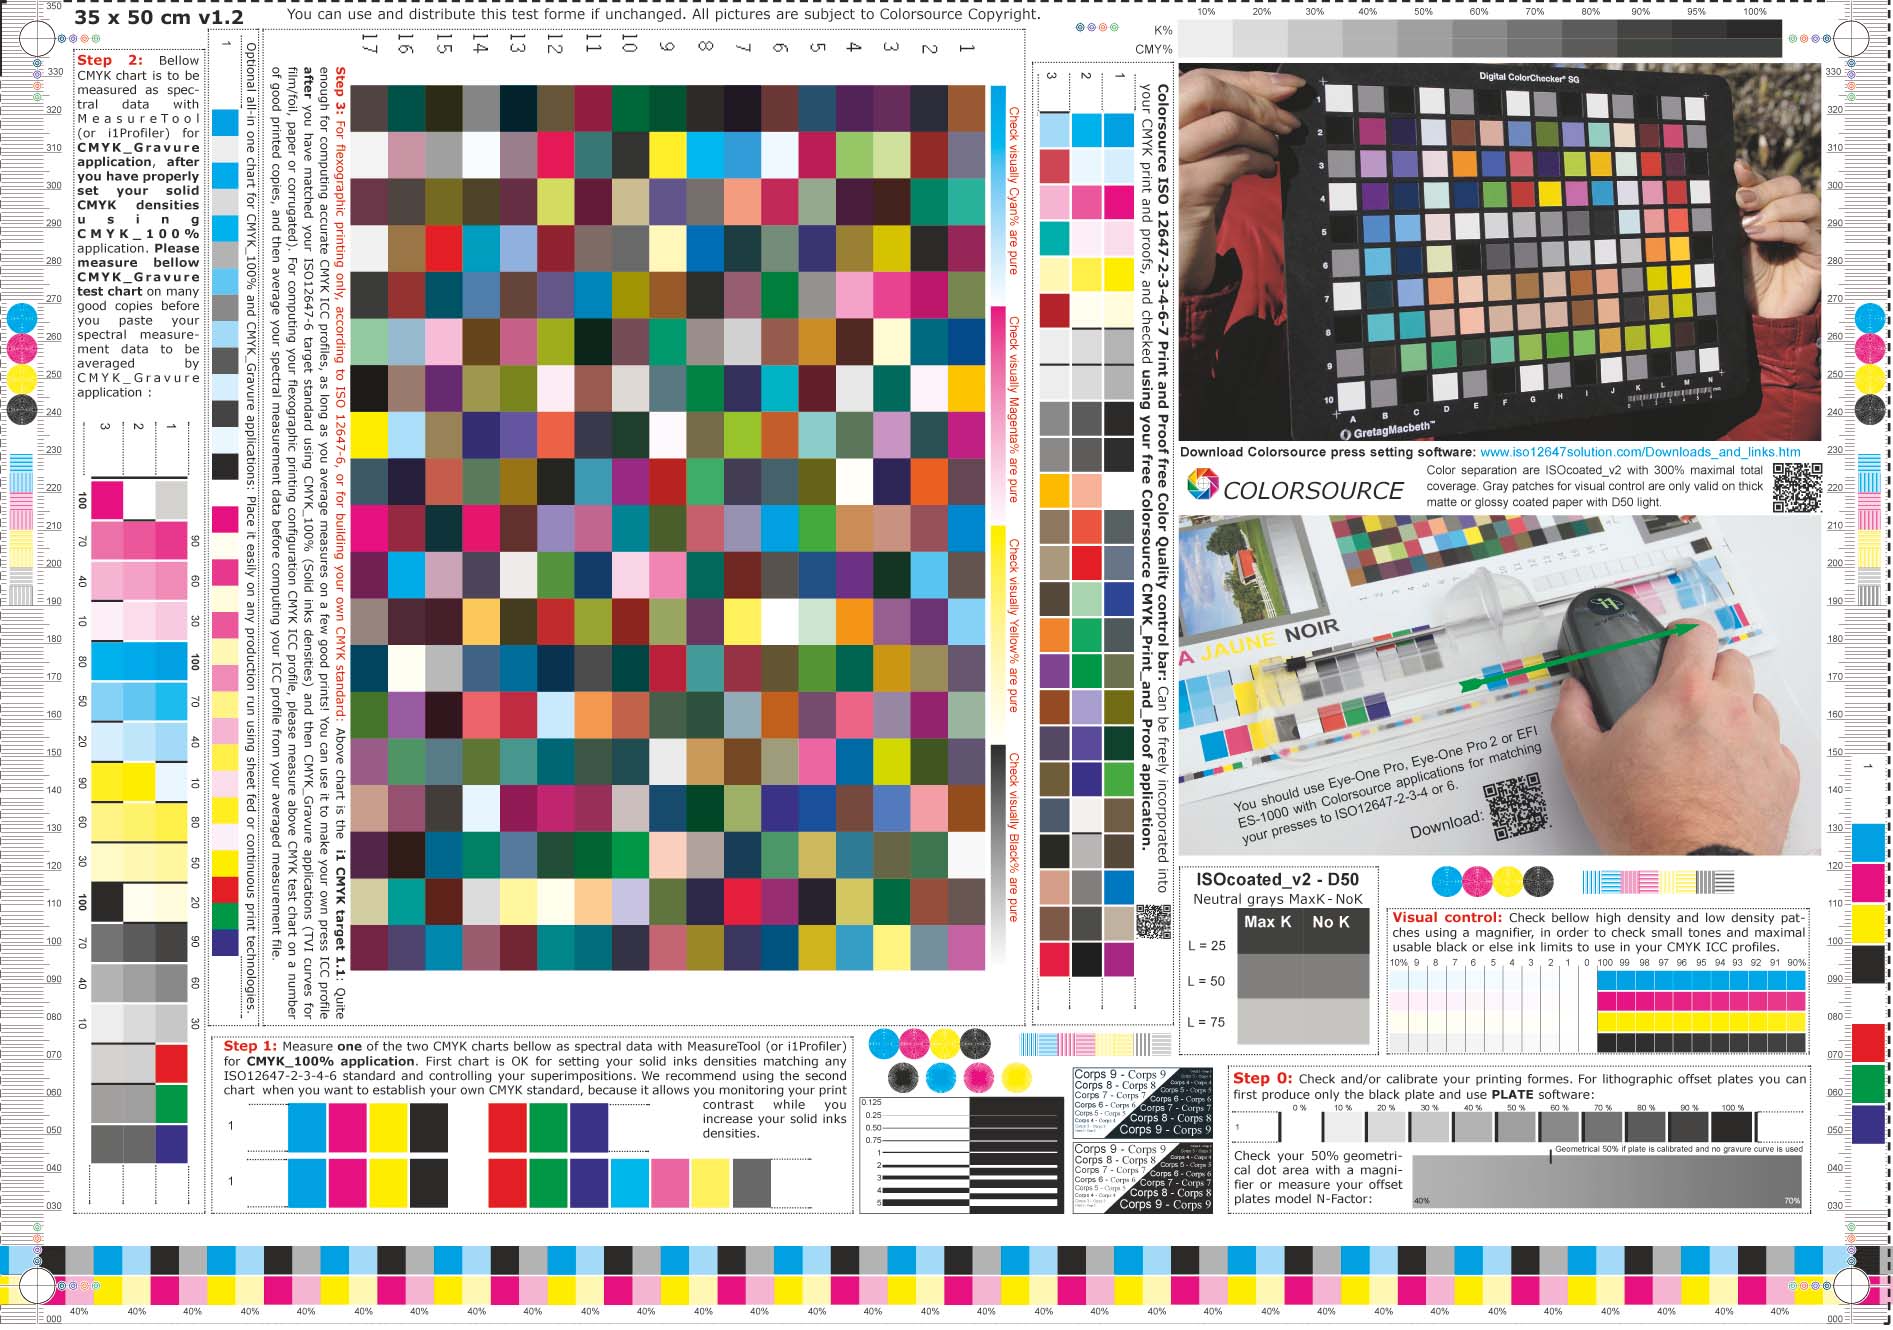 Detail of Colorsource 100 x 70 cm, 70 x 50 cm and 50 x 35 cm universal CMYK test form